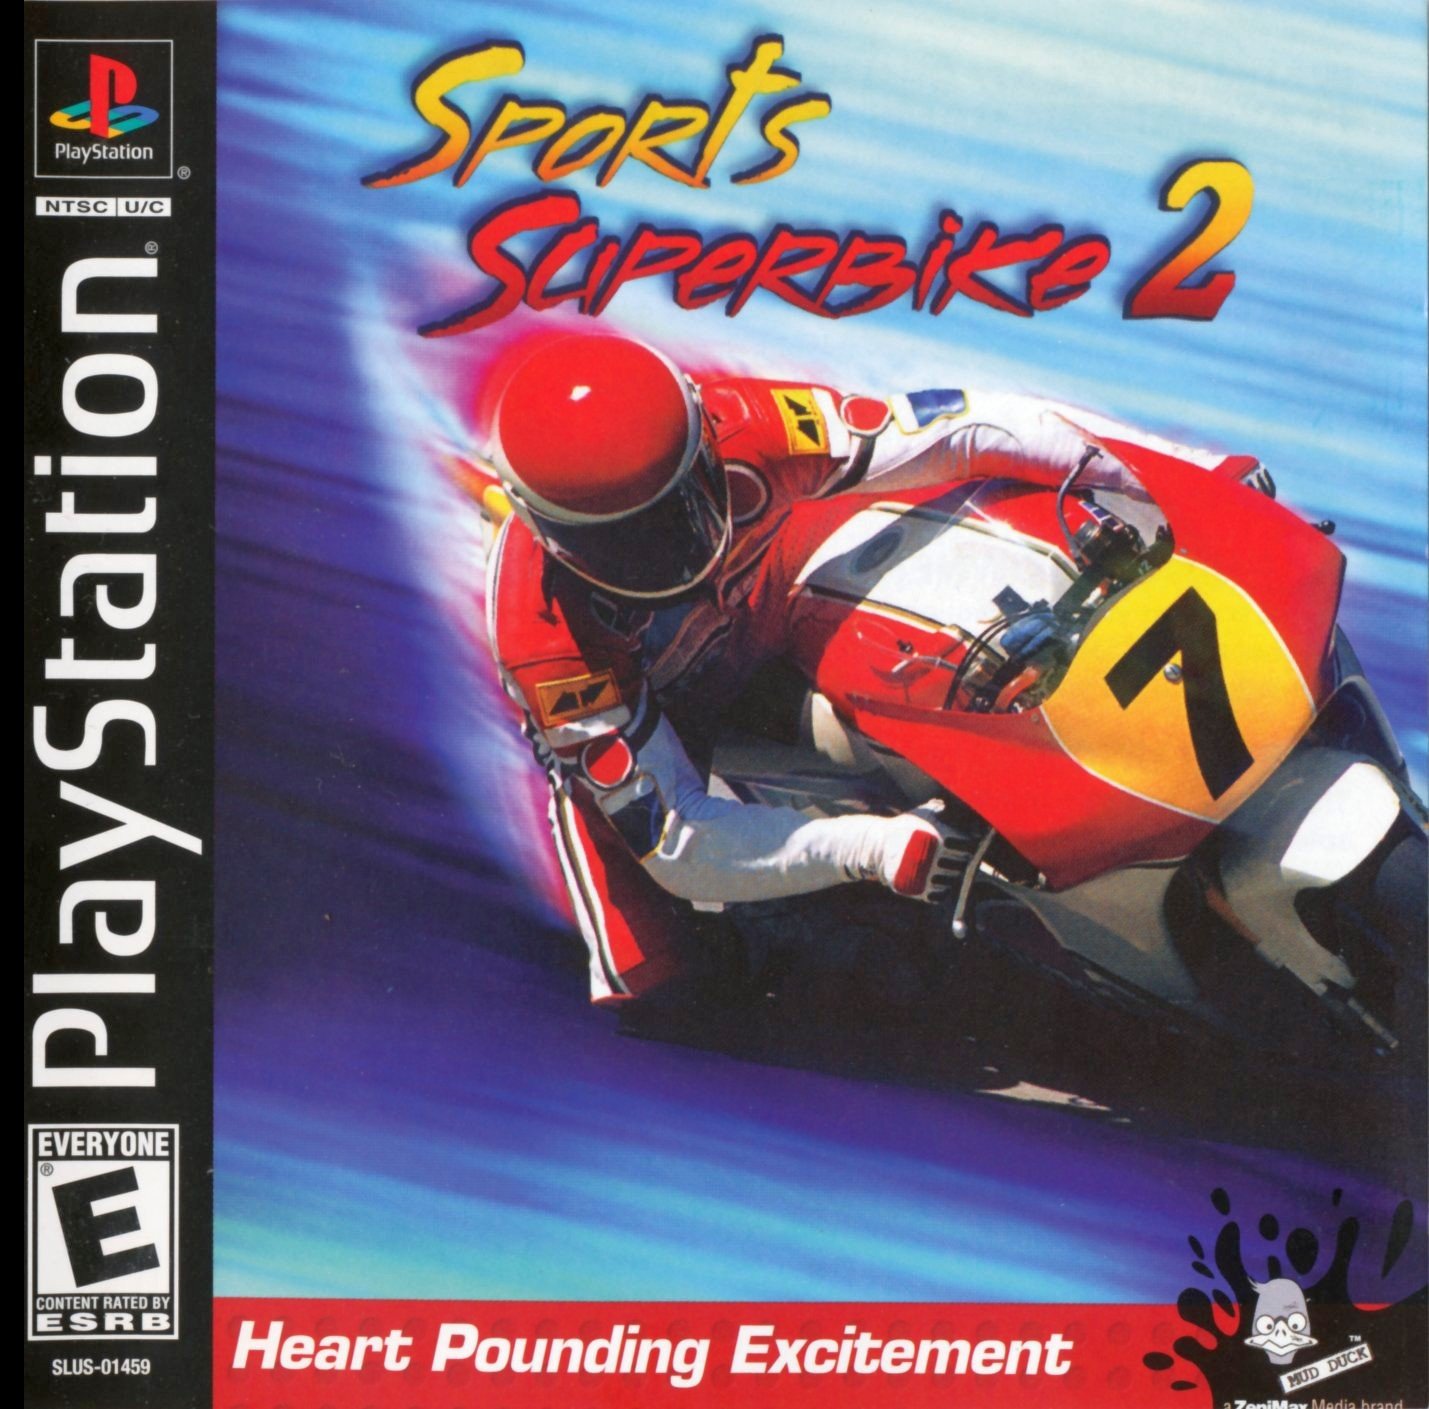 Image of Sports Superbike 2